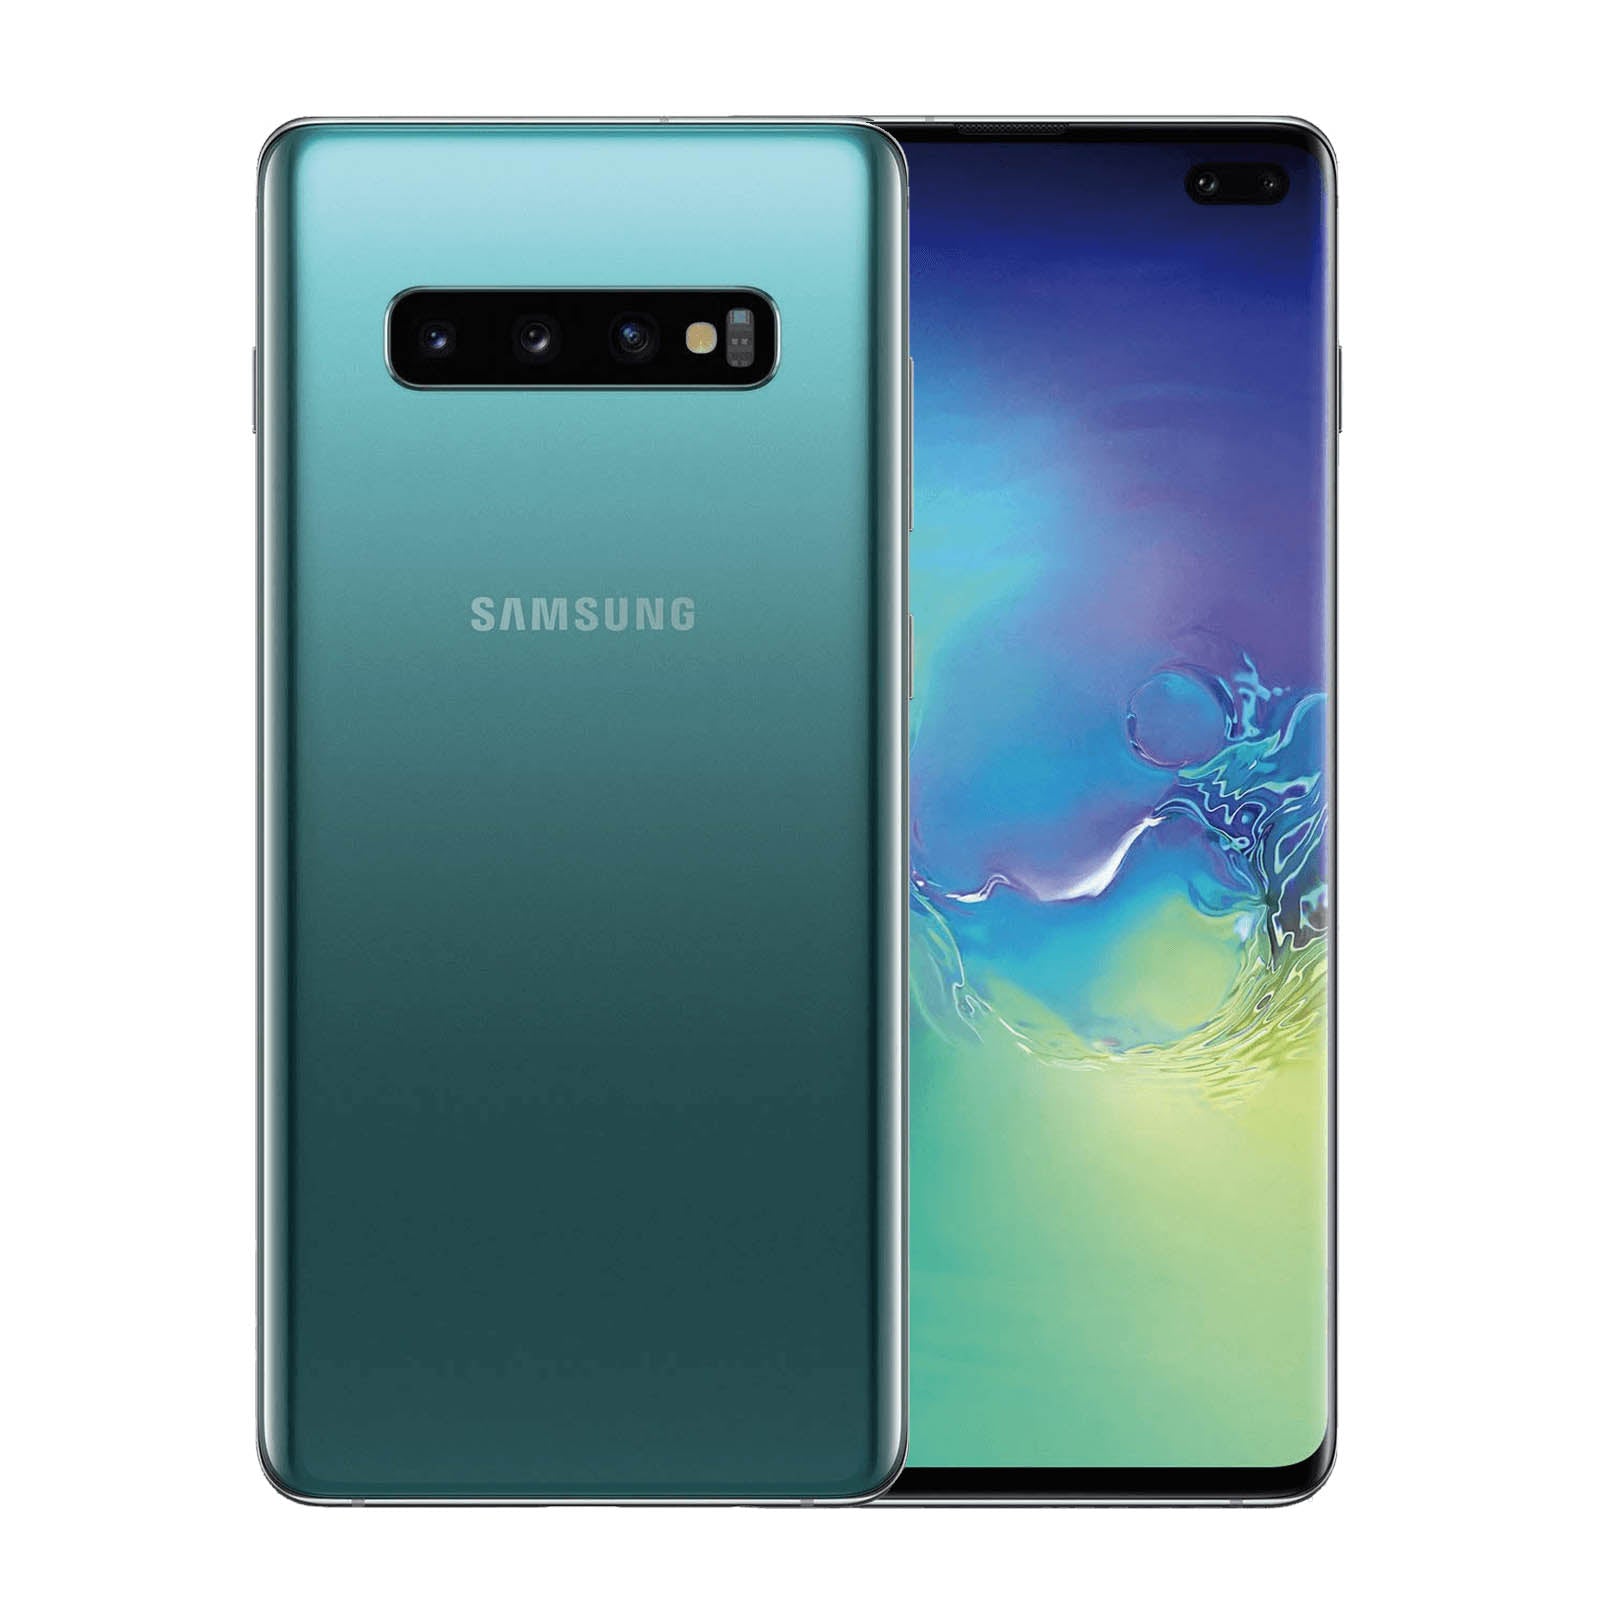 Samsung Galaxy S10 Plus 128GB Prism Green Good - Unlocked